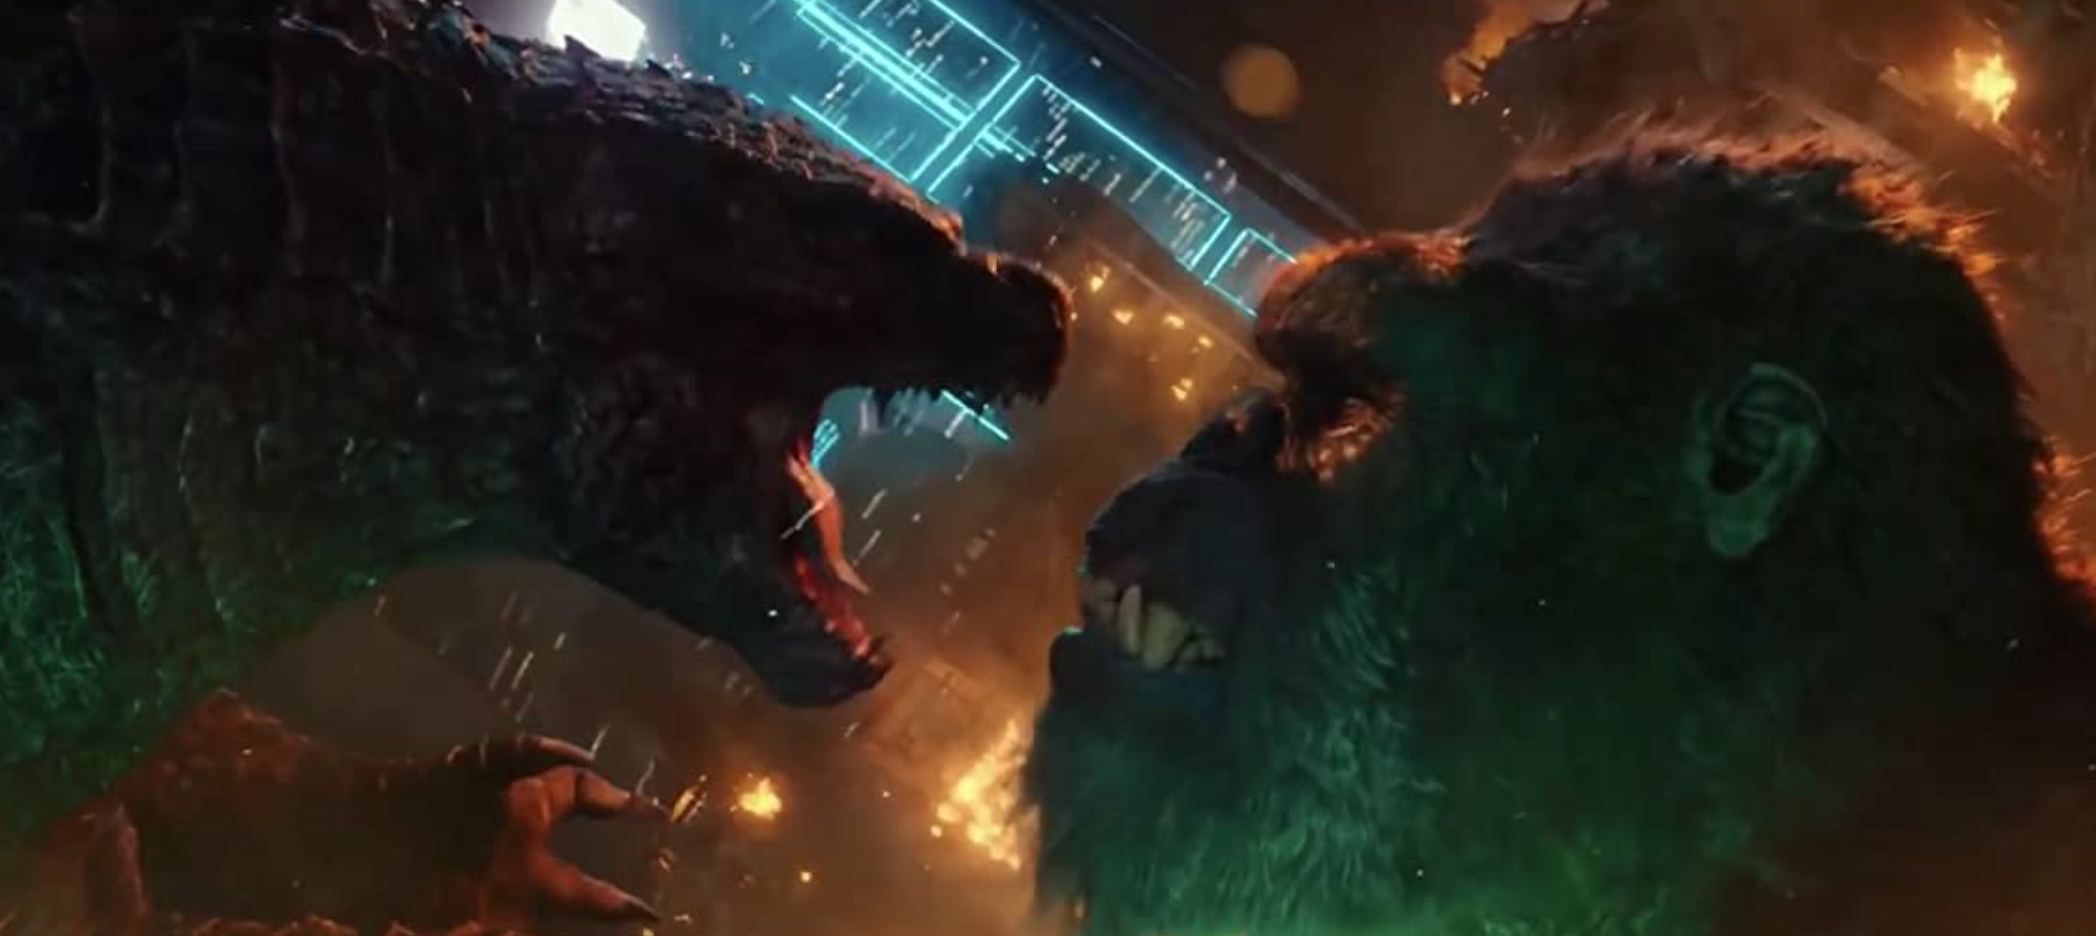 Size of godzilla (2014) vs godzilla earth  Godzilla, Kaiju monsters,  Godzilla tattoo